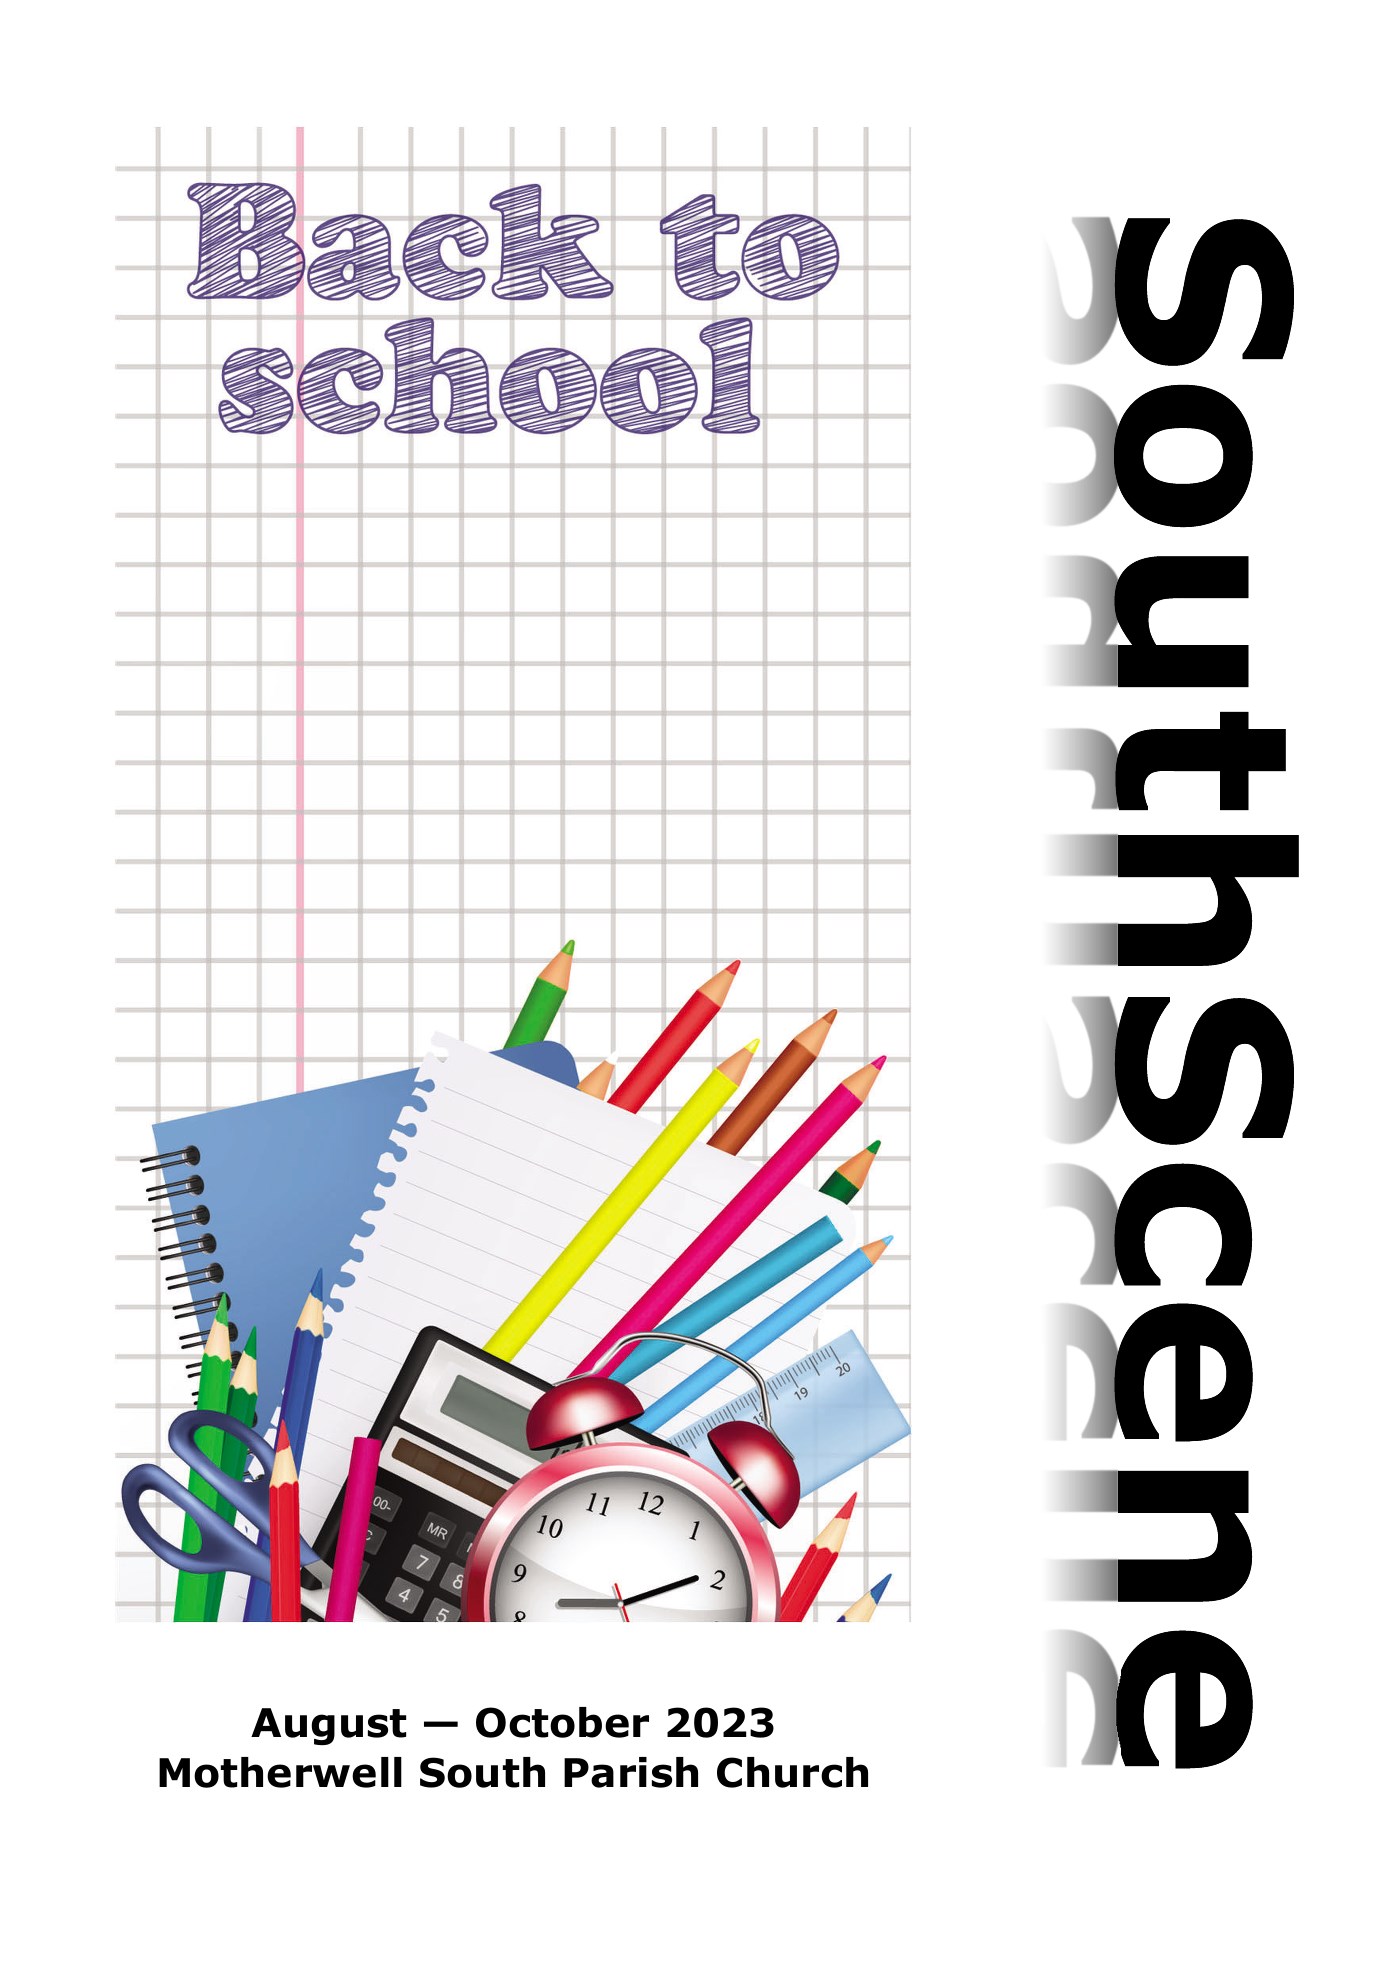 SouthScene: Back to School